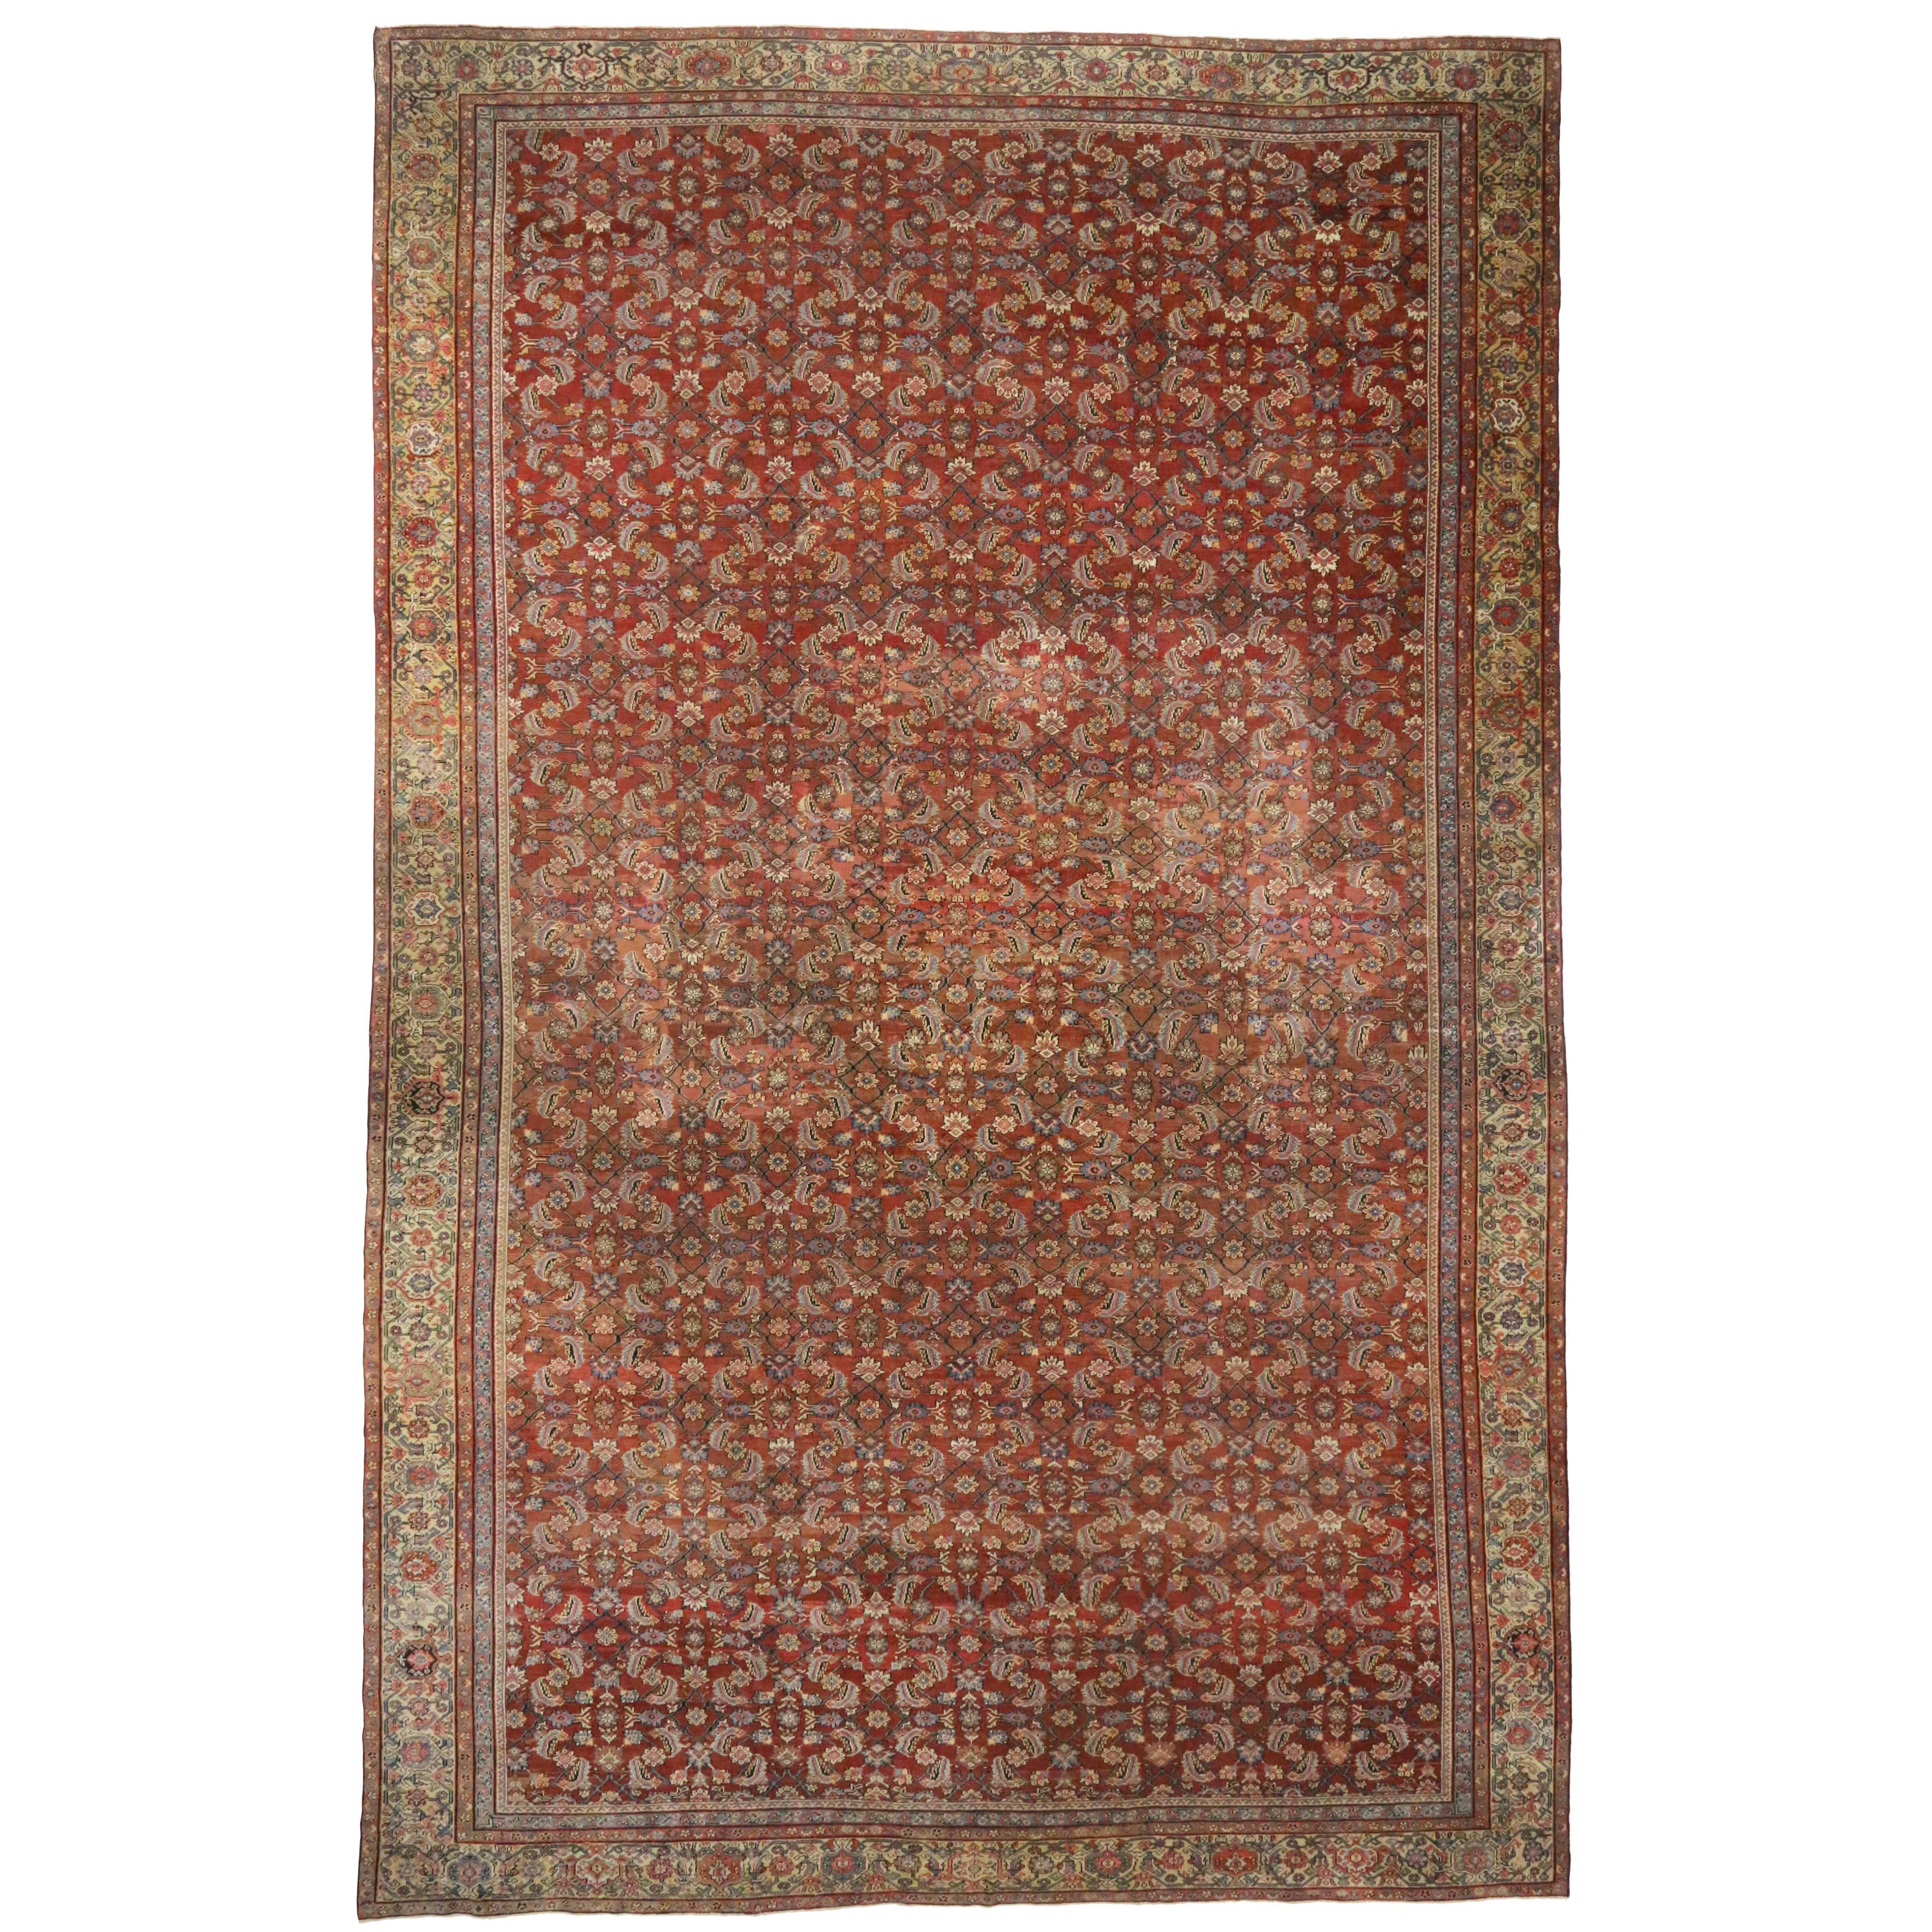 1880s Oversized Antique Persian Farahan Rug, Hotel Lobby Size Carpet